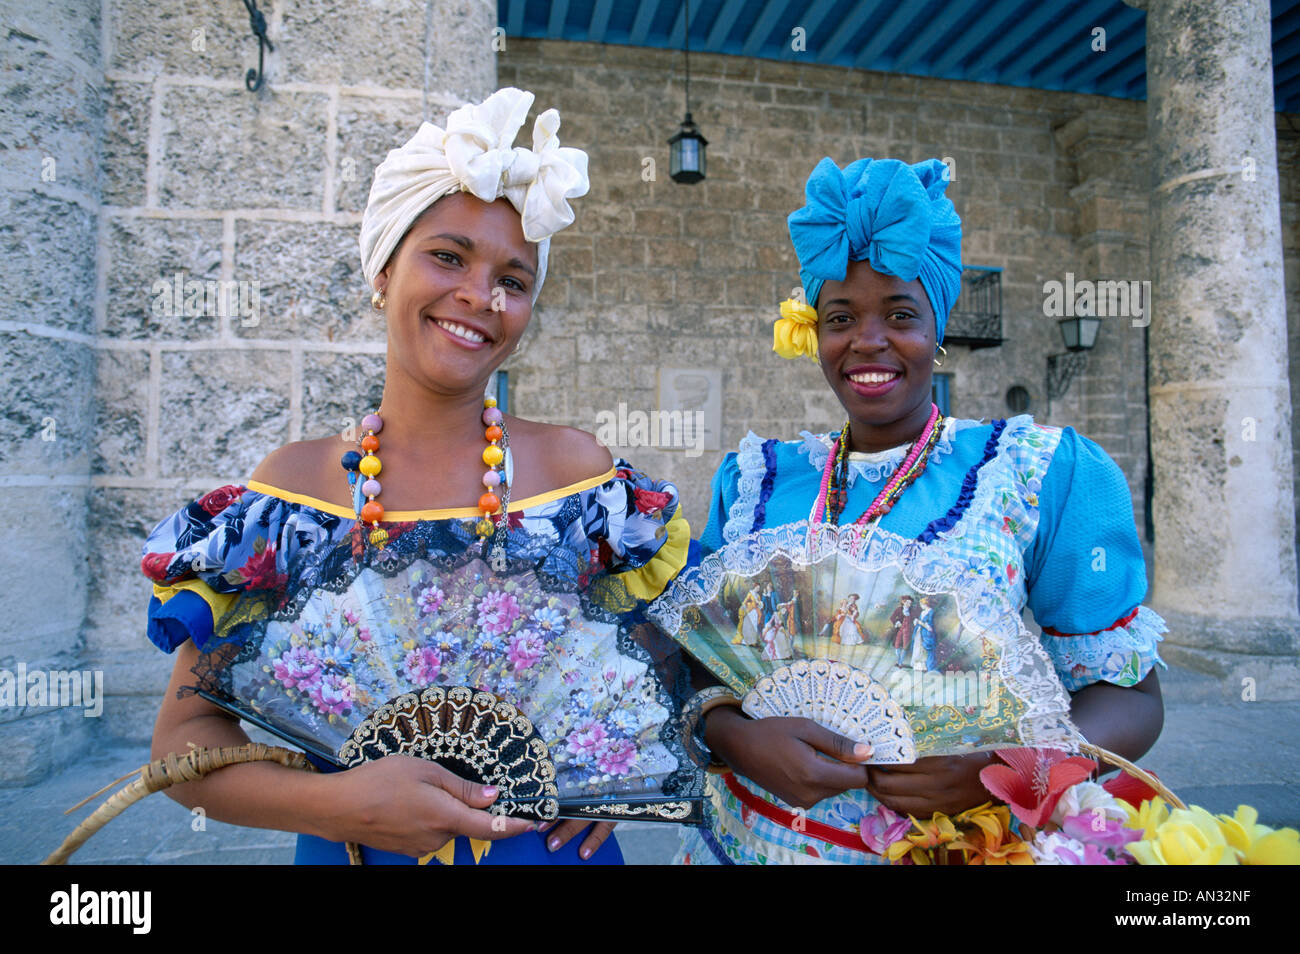 https://c8.alamy.com/comp/AN32NF/women-dressed-in-traditional-costume-colonial-dress-havana-habana-AN32NF.jpg